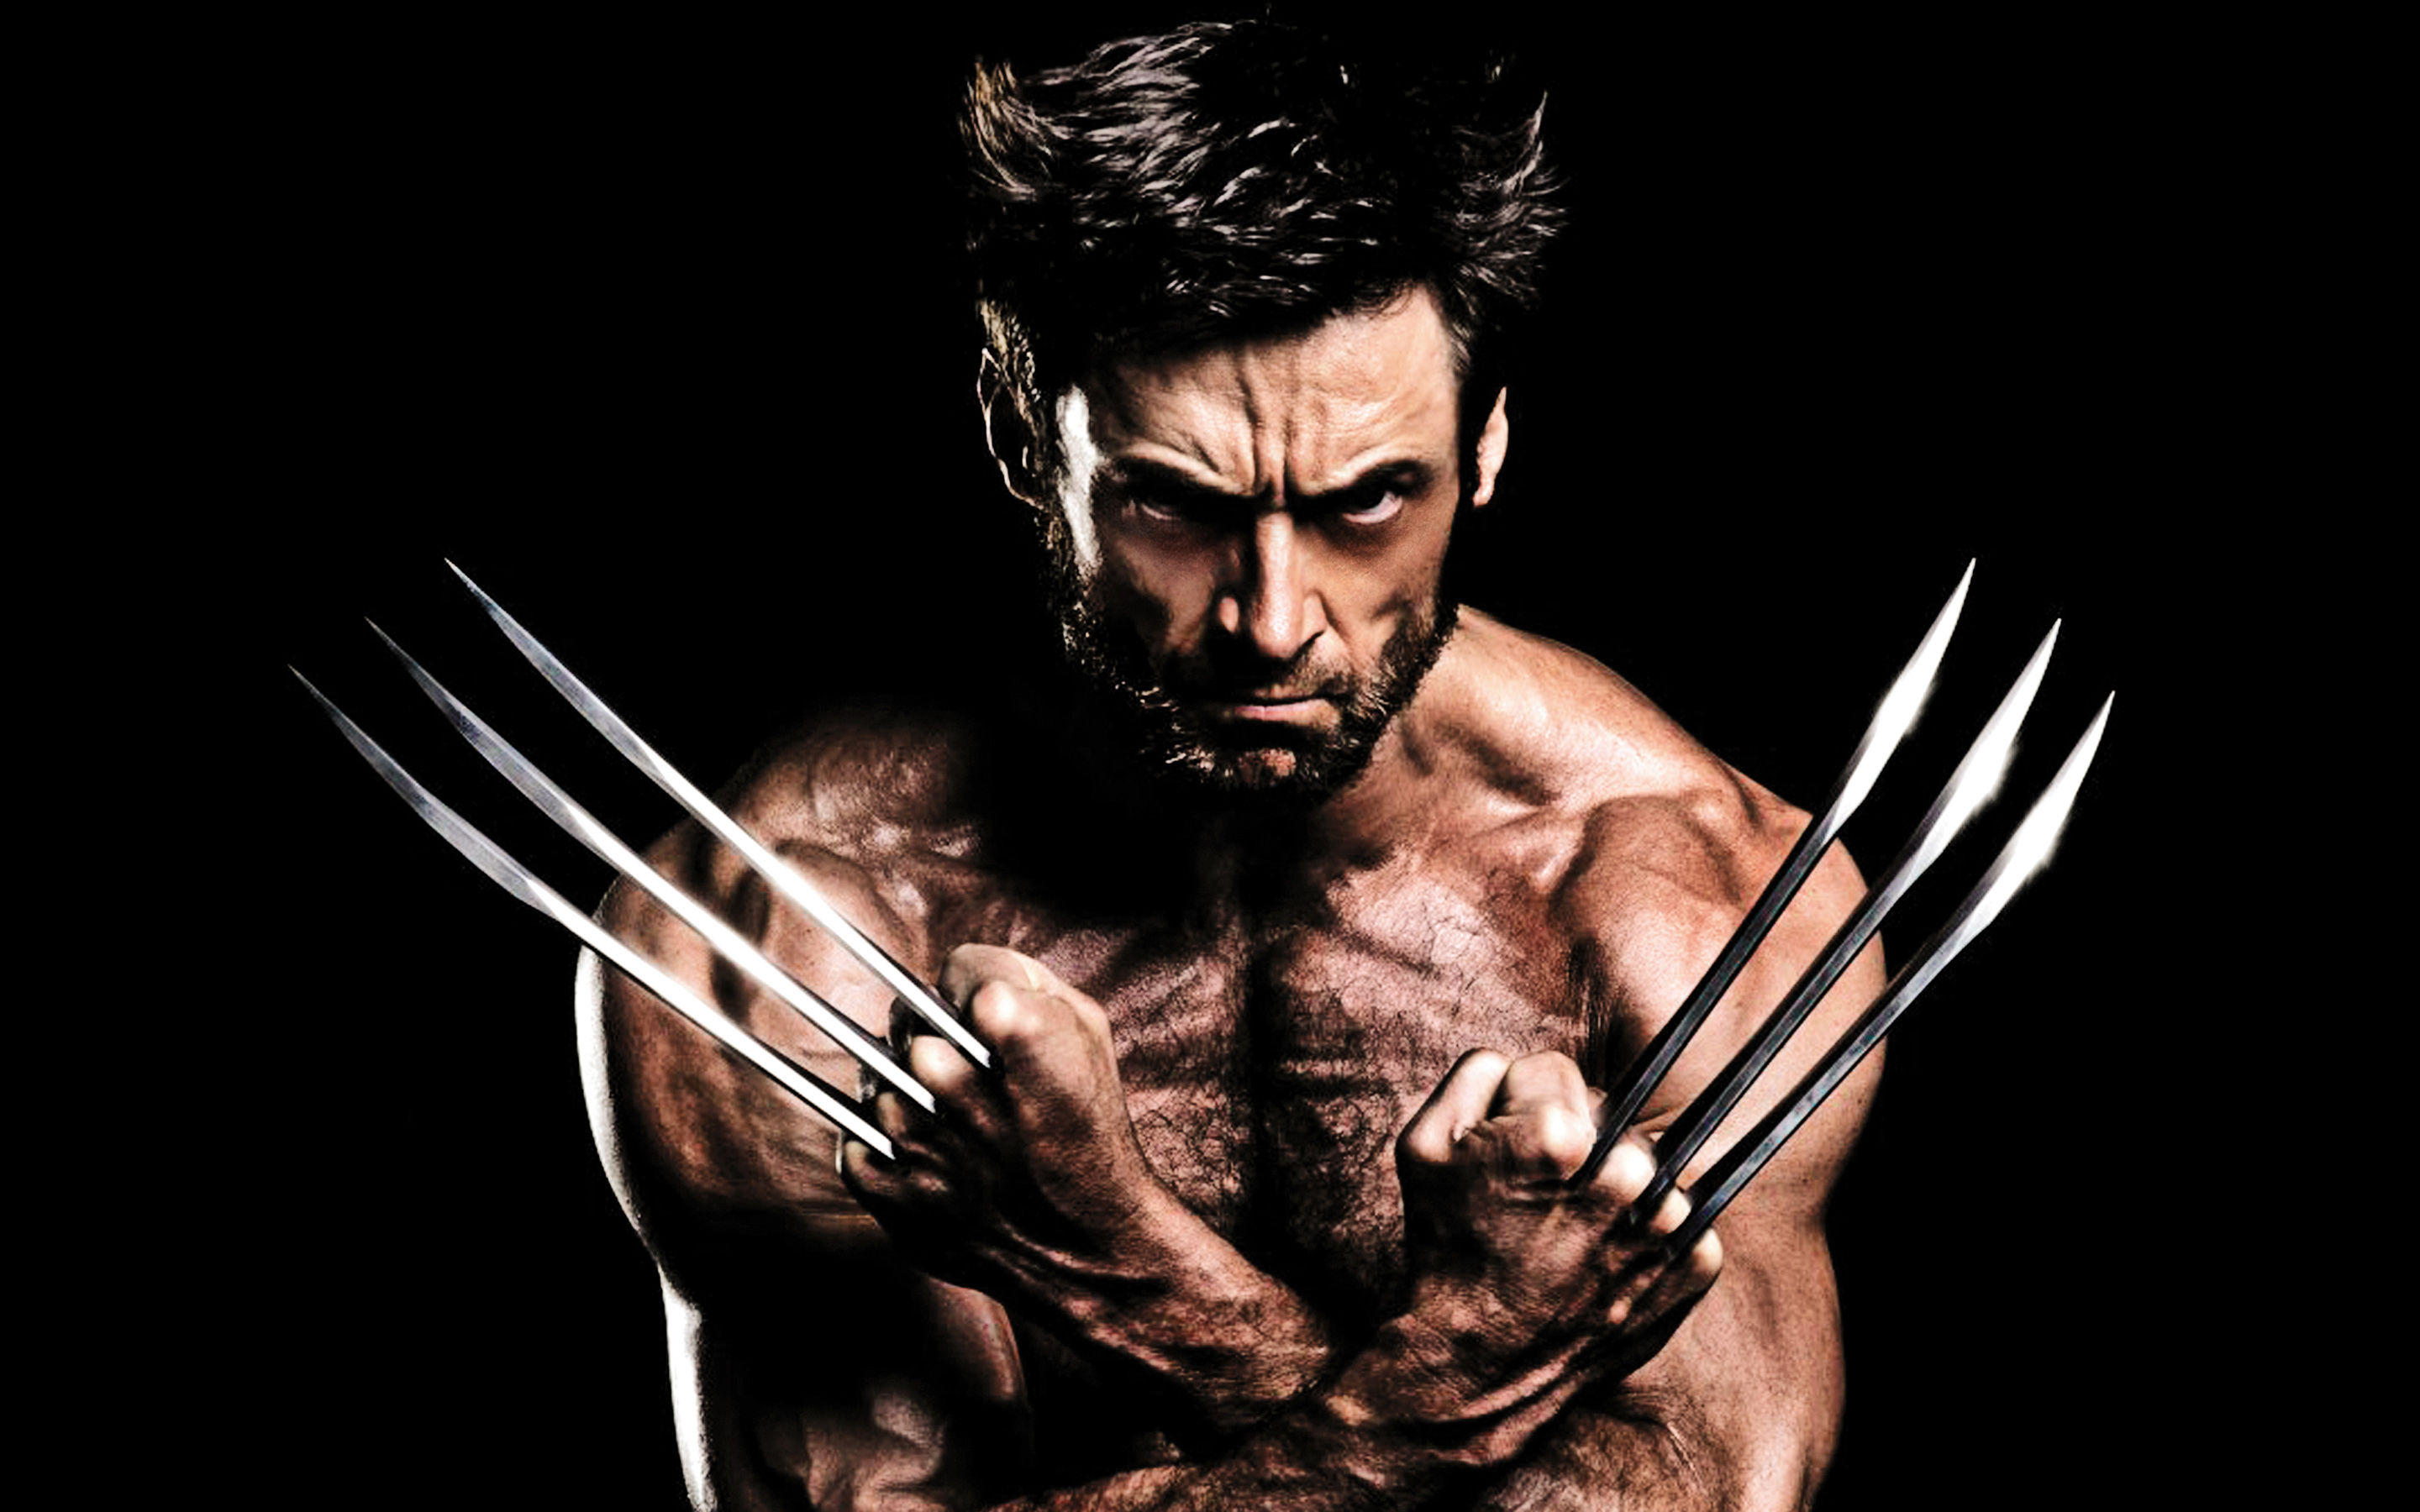 Wolverine, played by Hugh Jackman